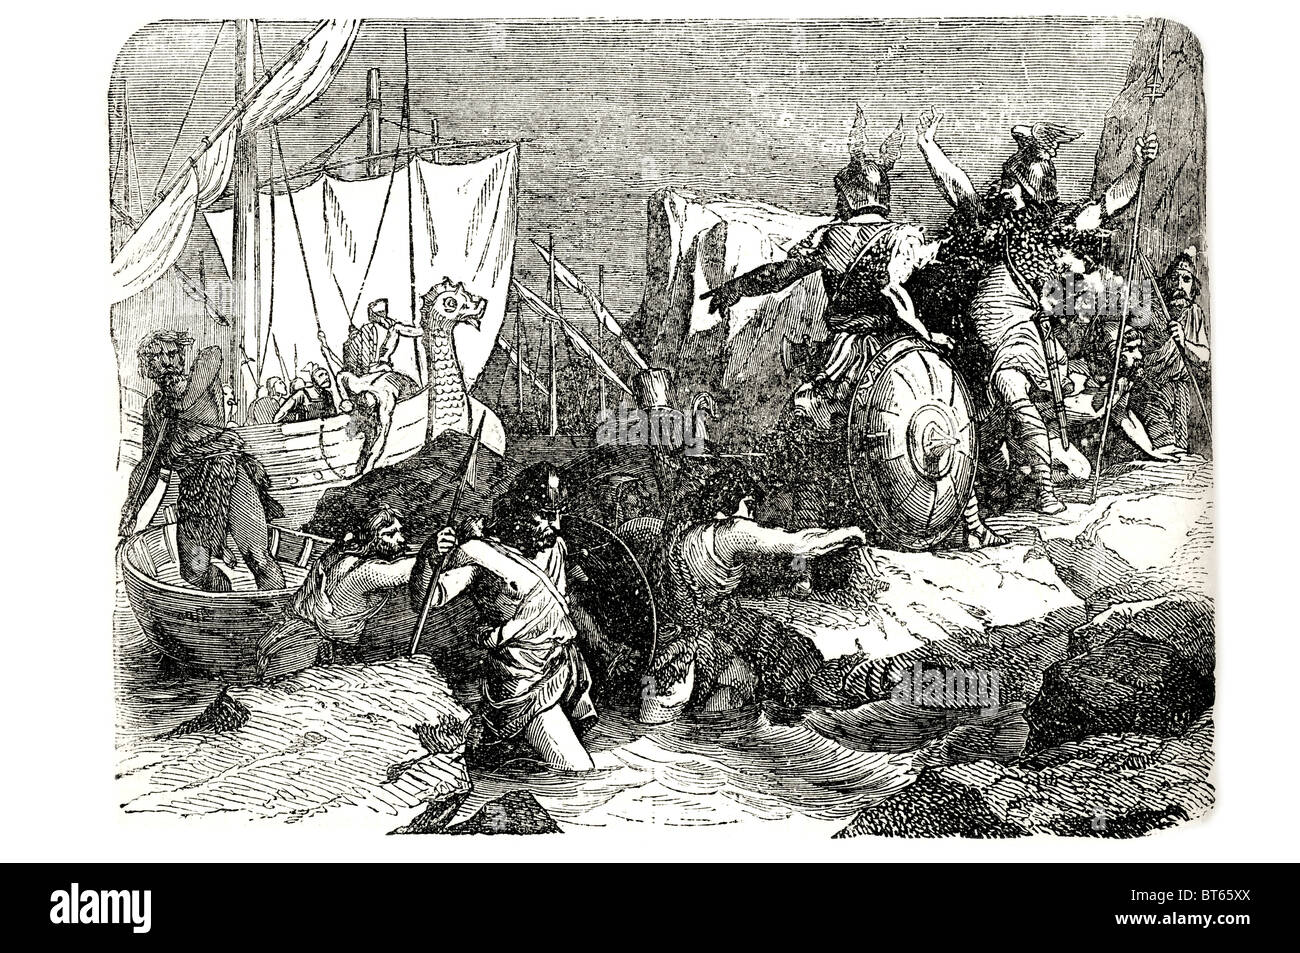 Hengist Hengest  Horsa Hors invasion piratical pirate English British legend Germanic brothers  led Angle Saxon Jutish armies ar Stock Photo